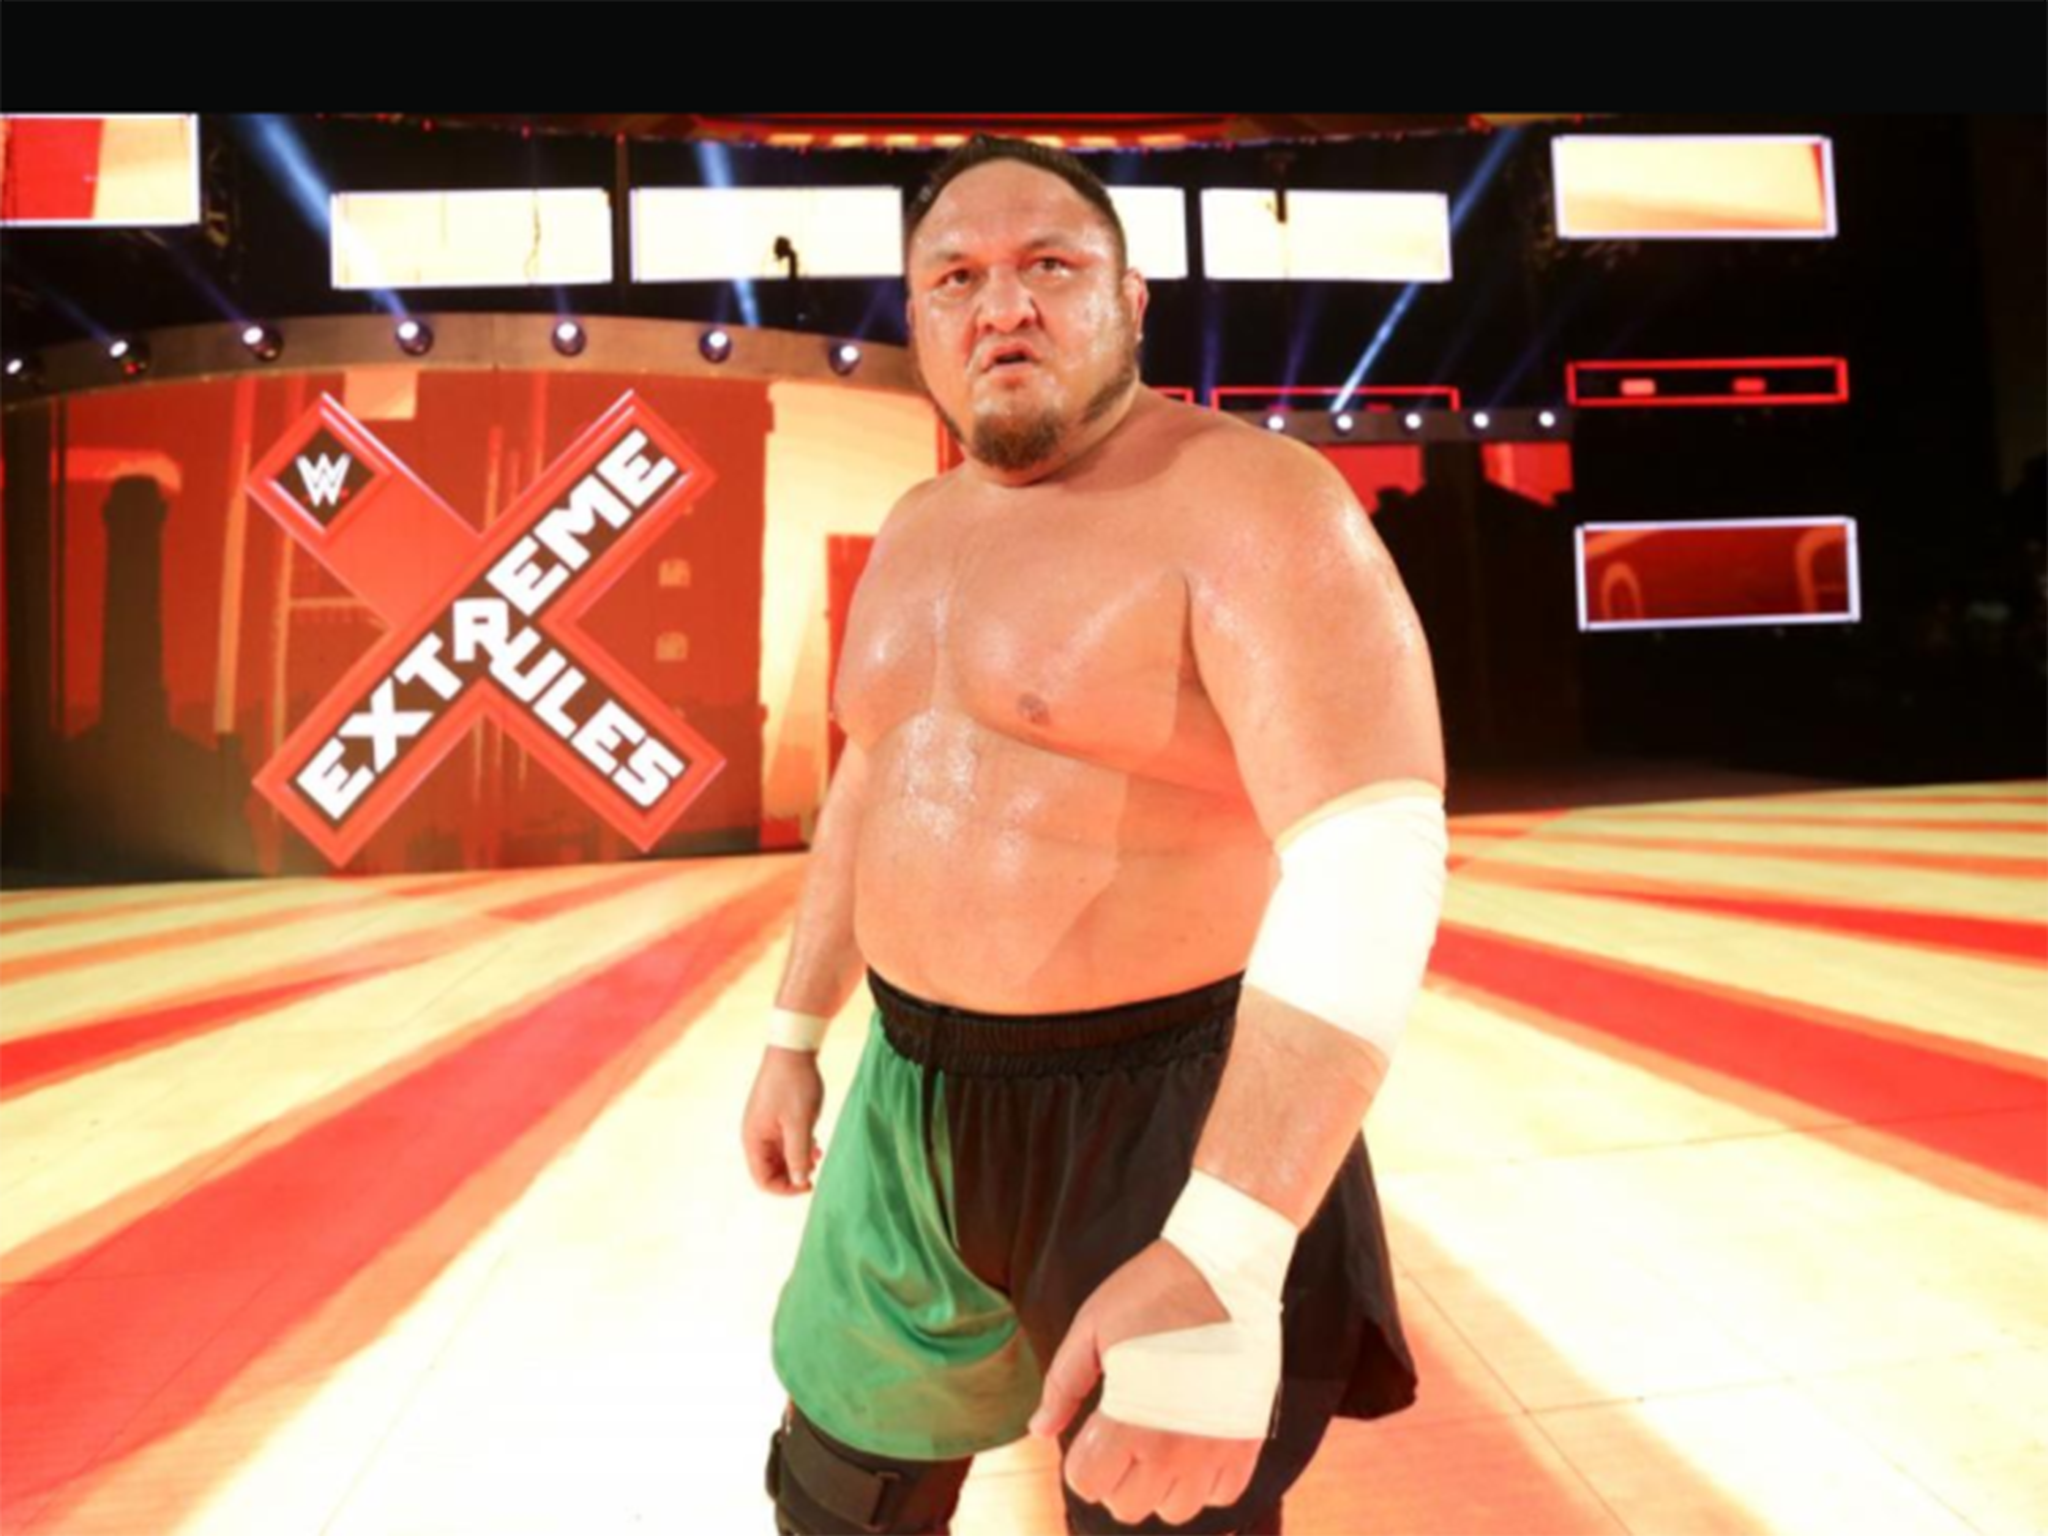 Samoa Joe will face WWE Universal champion Brock Lesnar